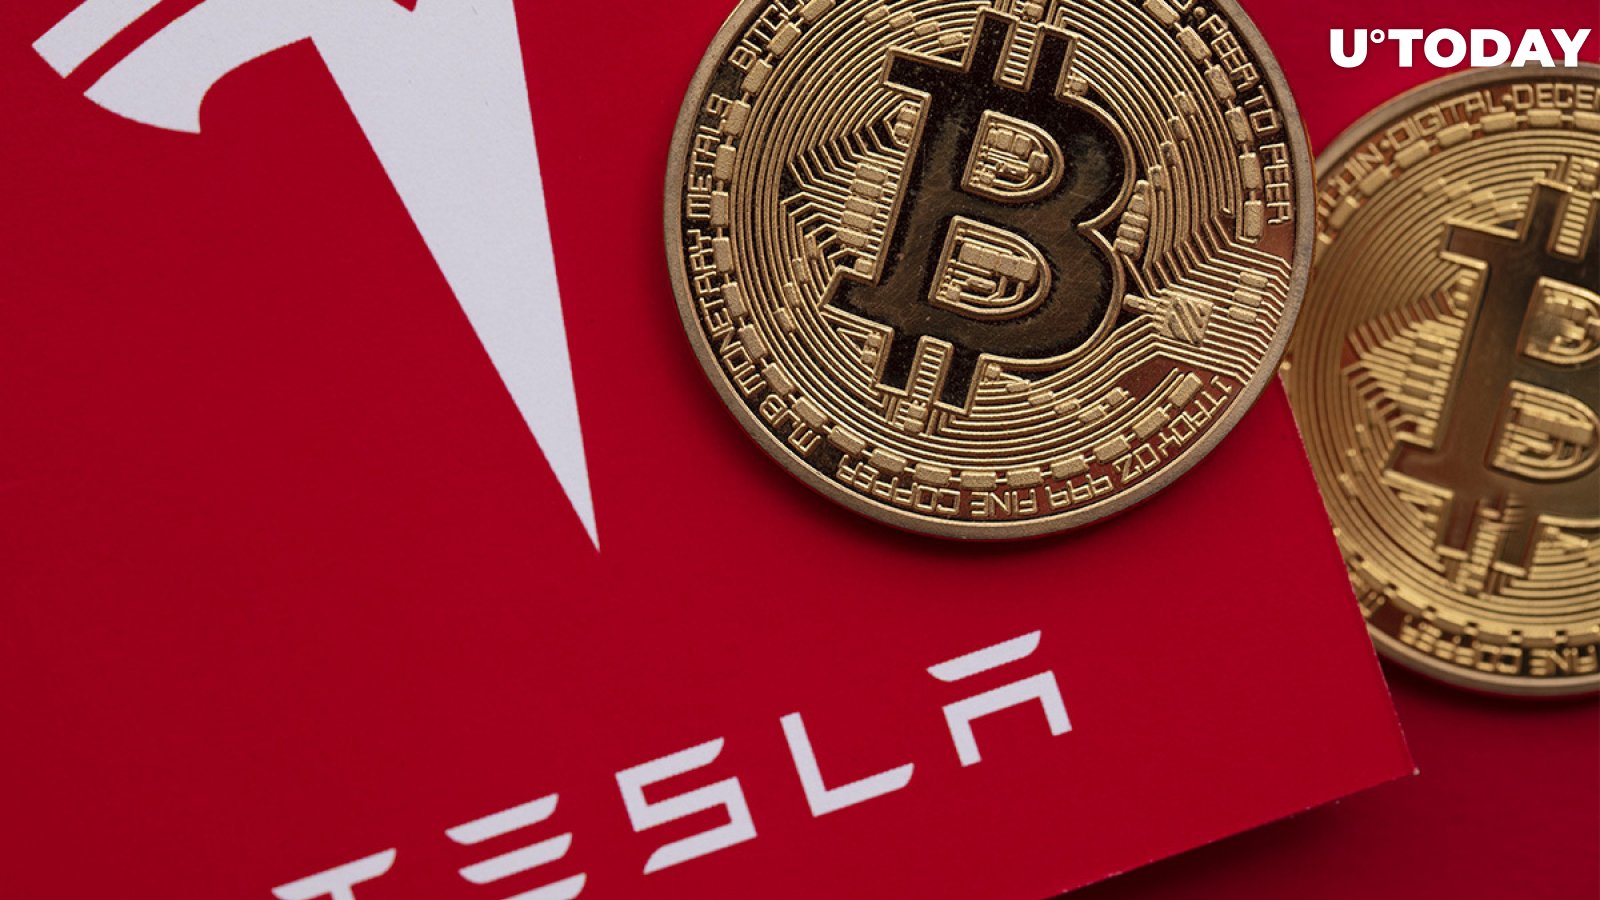 Elon Musk’s Statement That Tesla May Accept Bitcoin Again Pushes TSLA Price Up: Former Goldman Sachs CIO